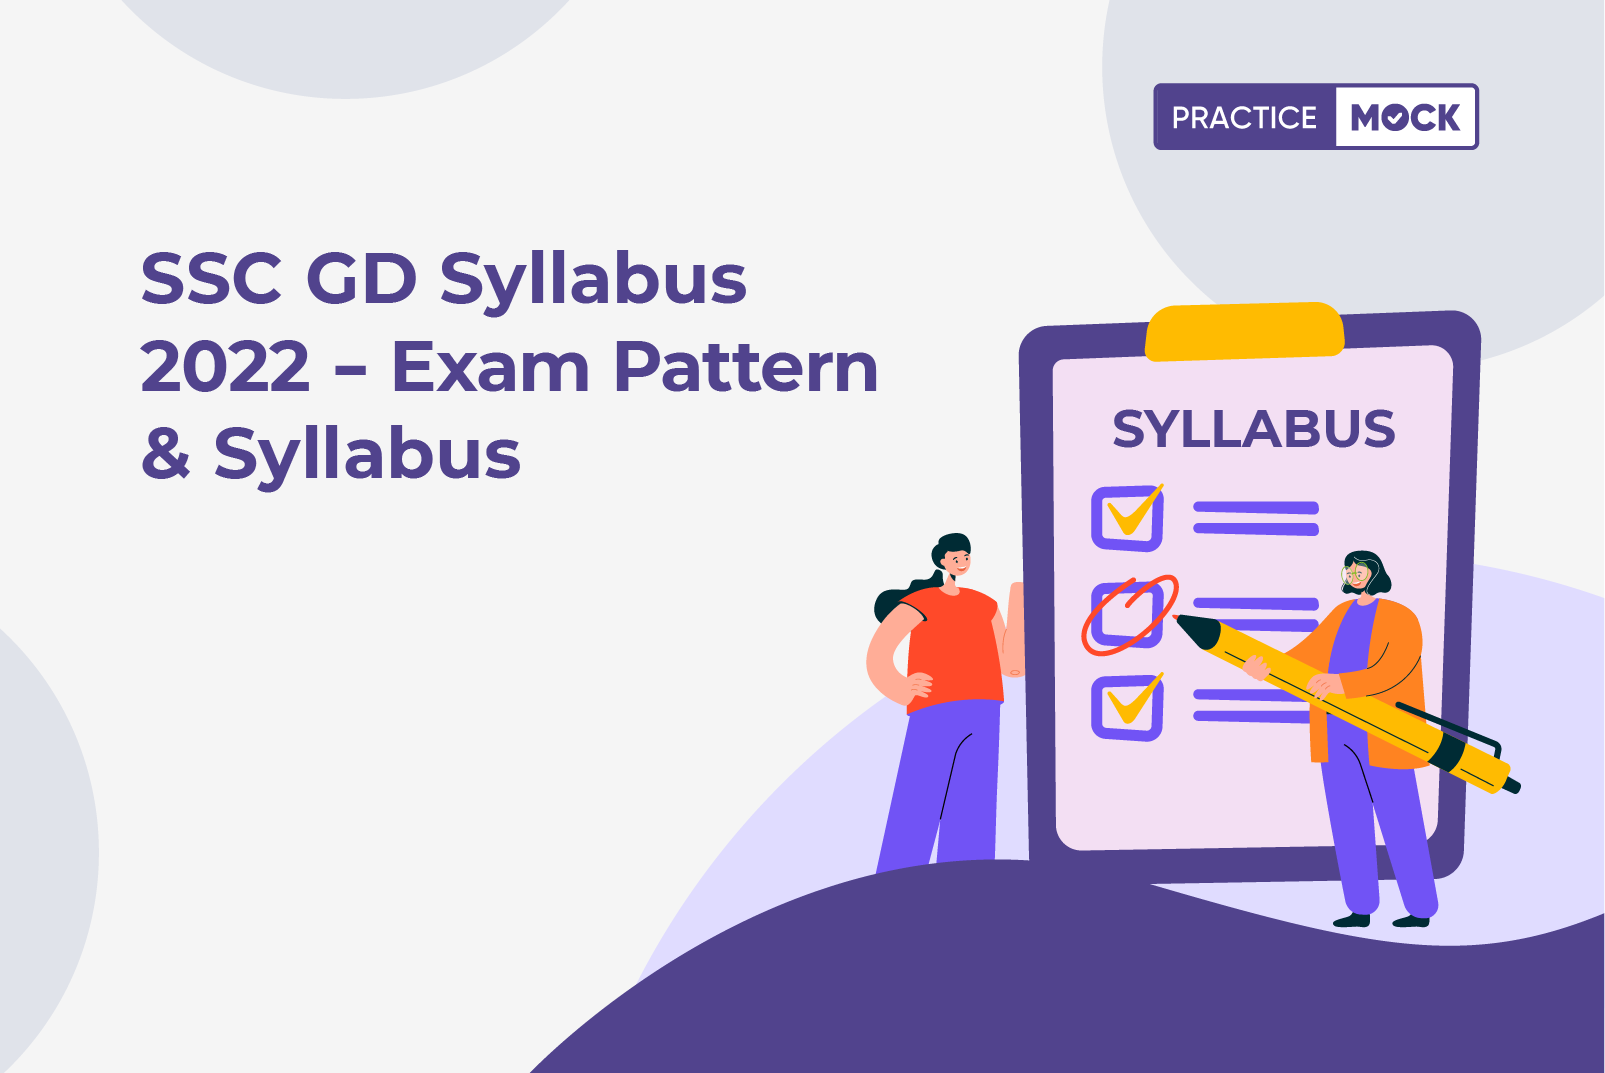 SSC GD Syllabus 2022-Exam Pattern & Syllabus